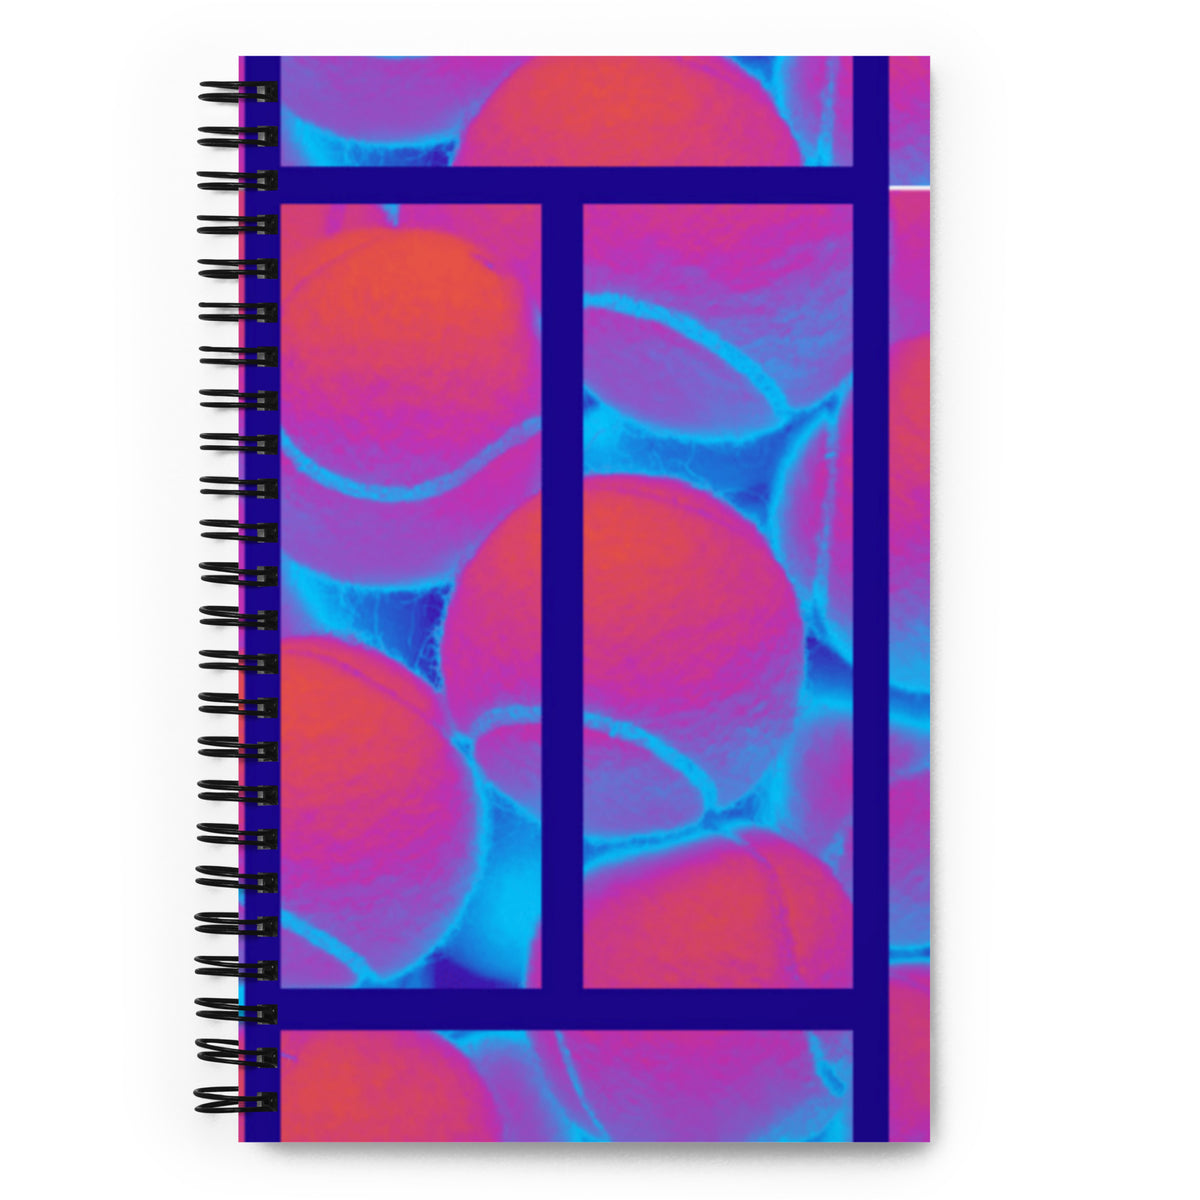 Spiral notebook 6